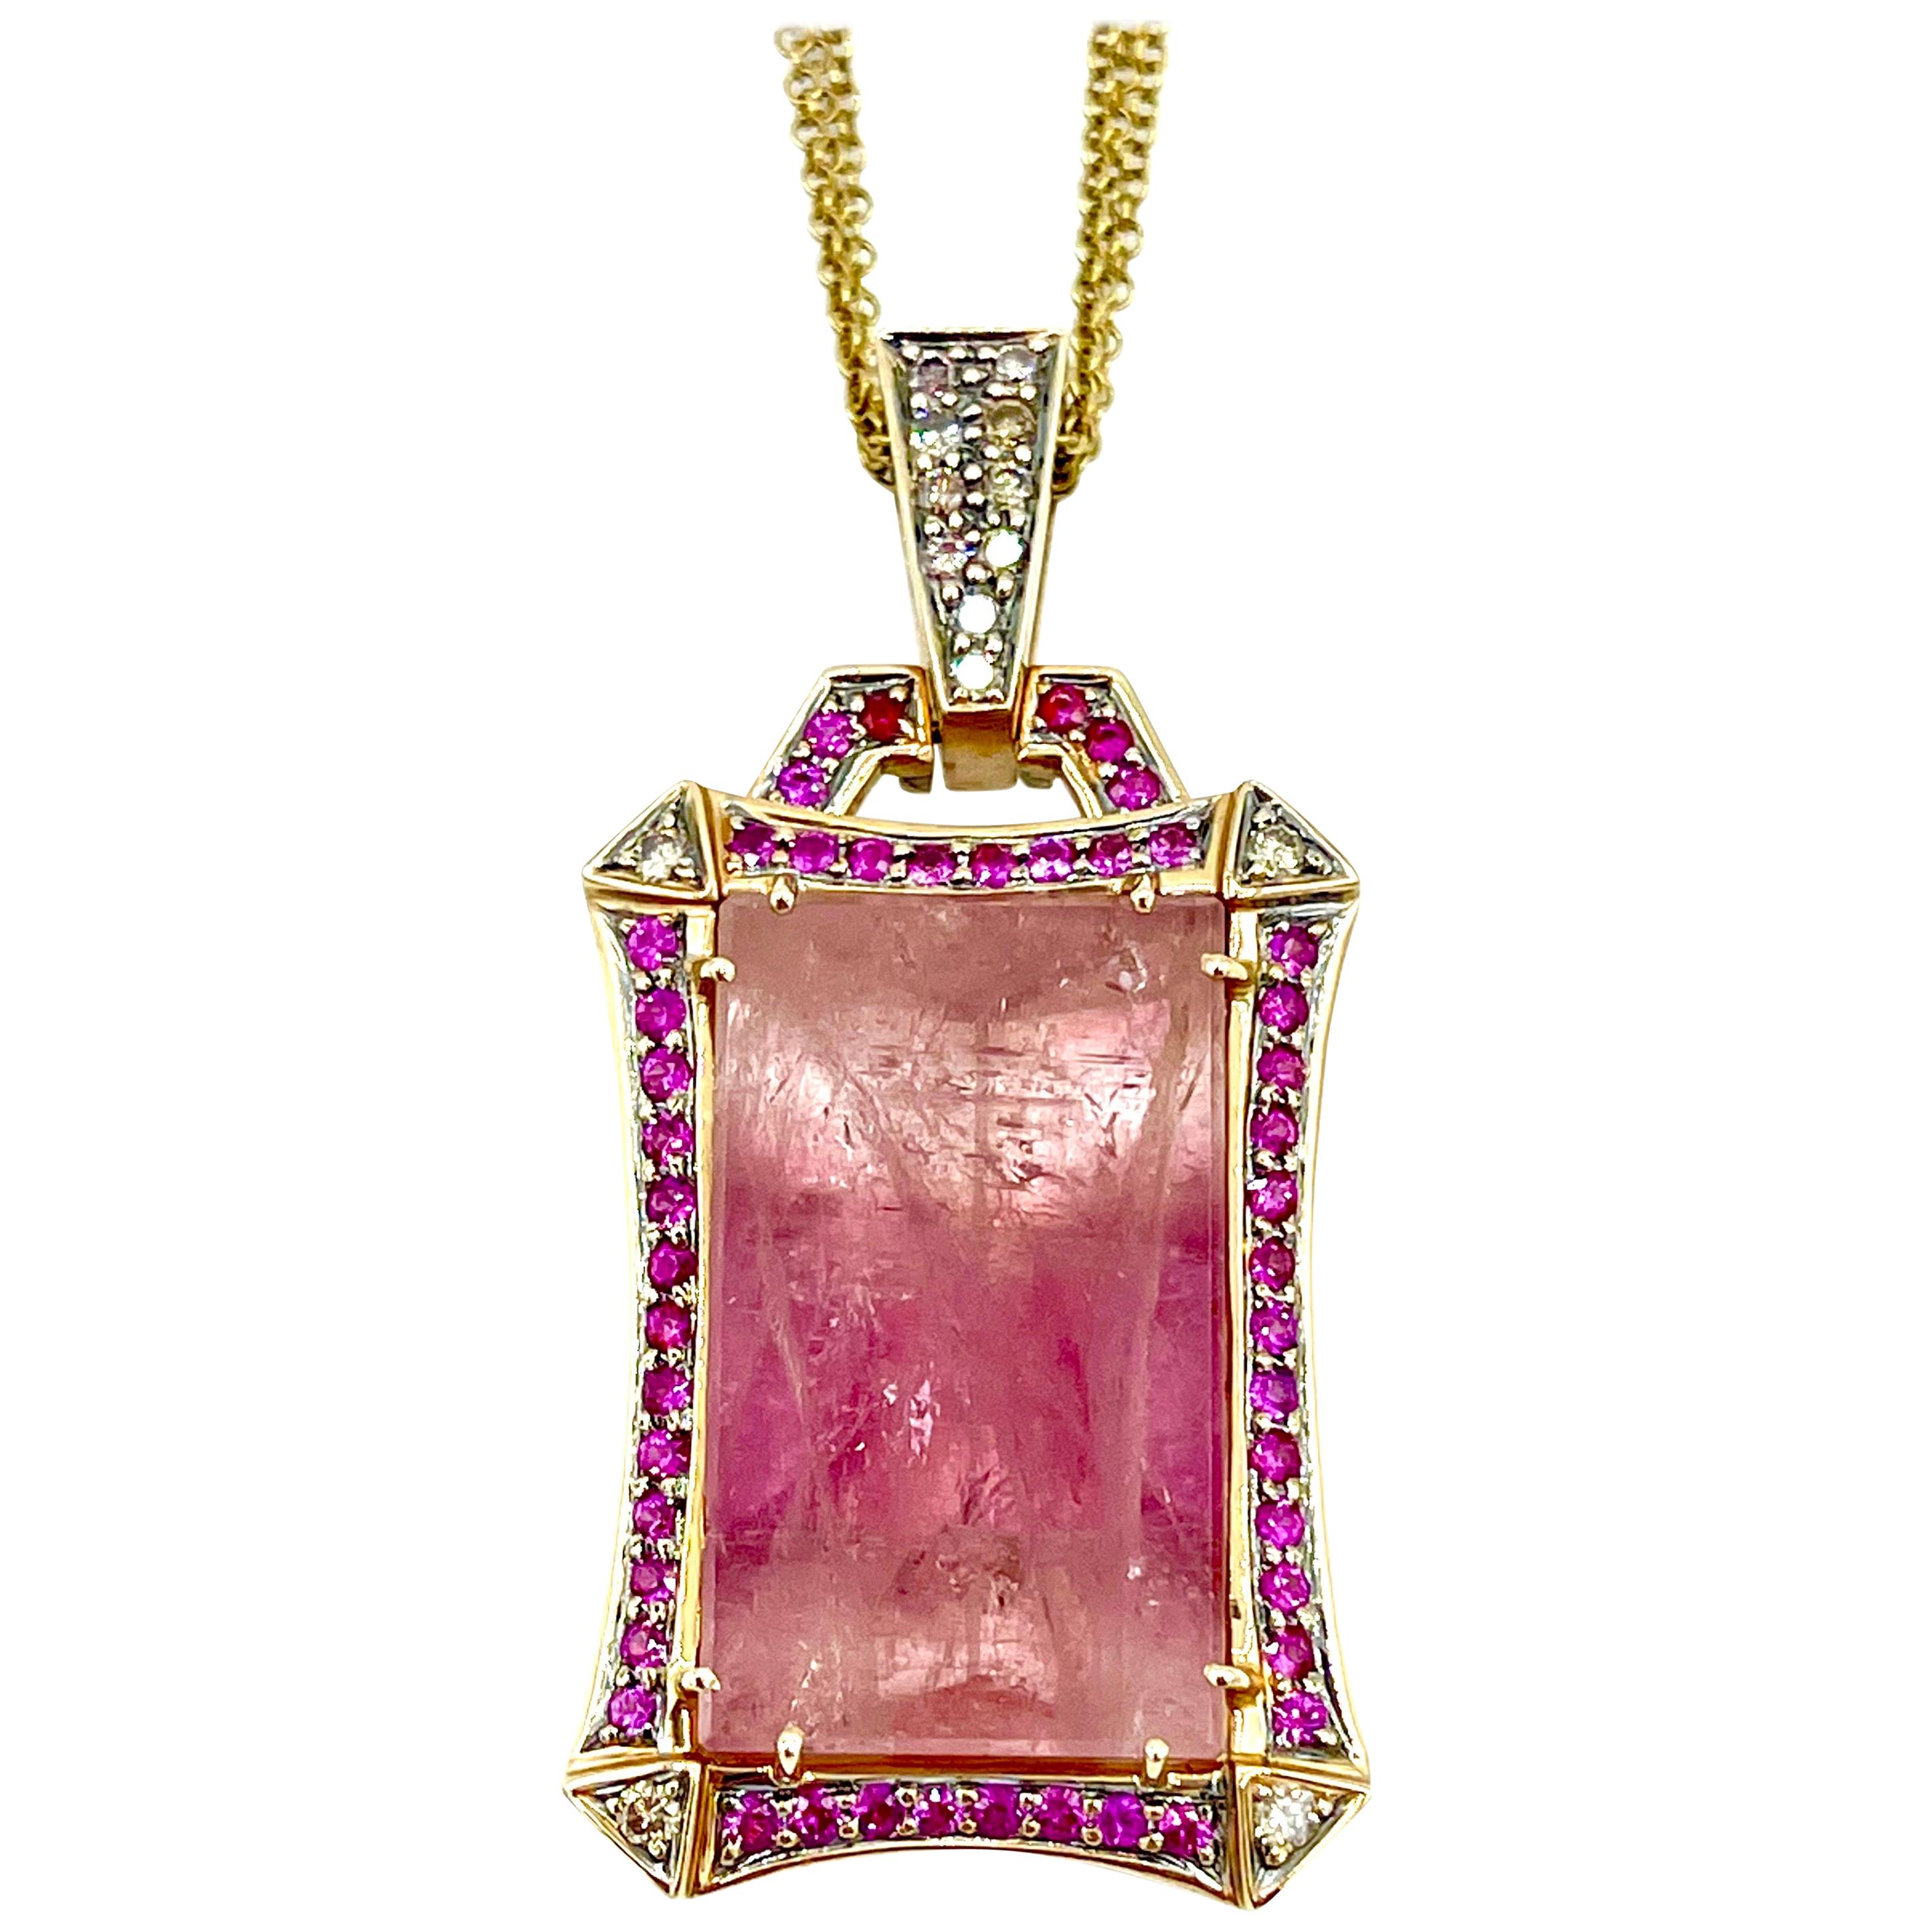 Robert Wander 35.17 Carat Emerald Cut Pink Tourmaline and Diamond Necklace